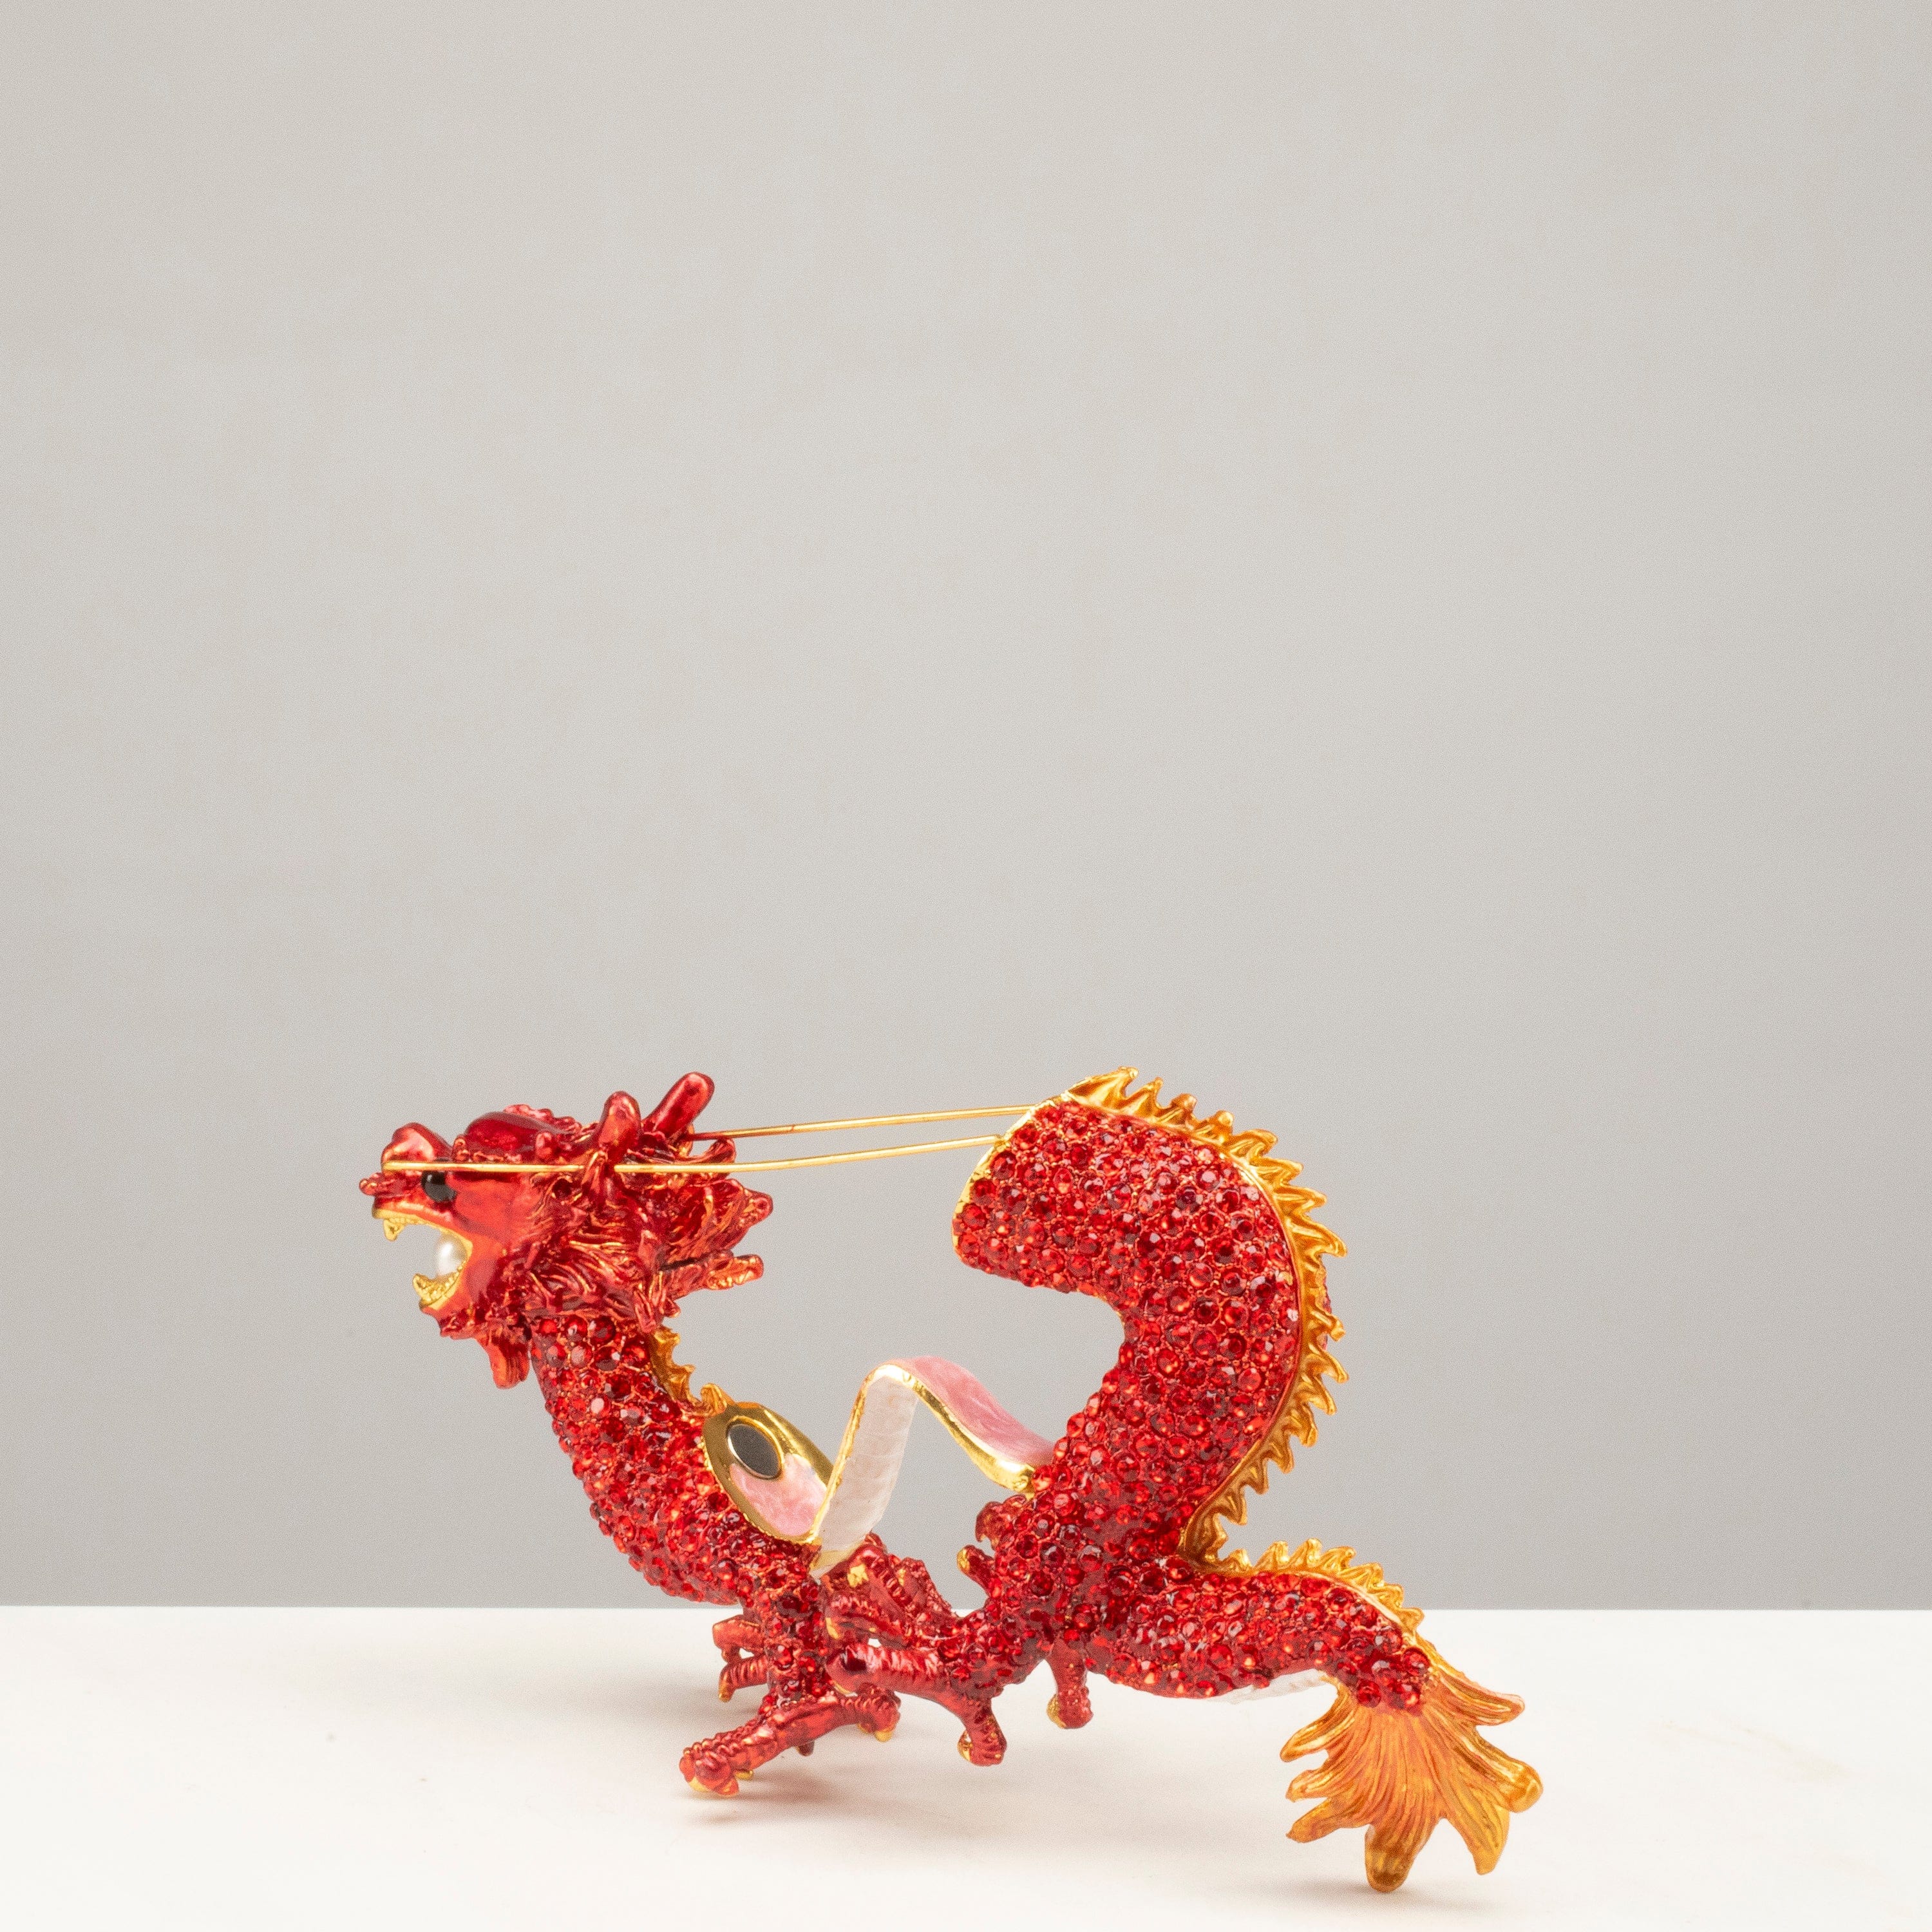 Kalifano Vanity Figurine Dragon Figurine Keepsake Box made with Crystals SVA-116